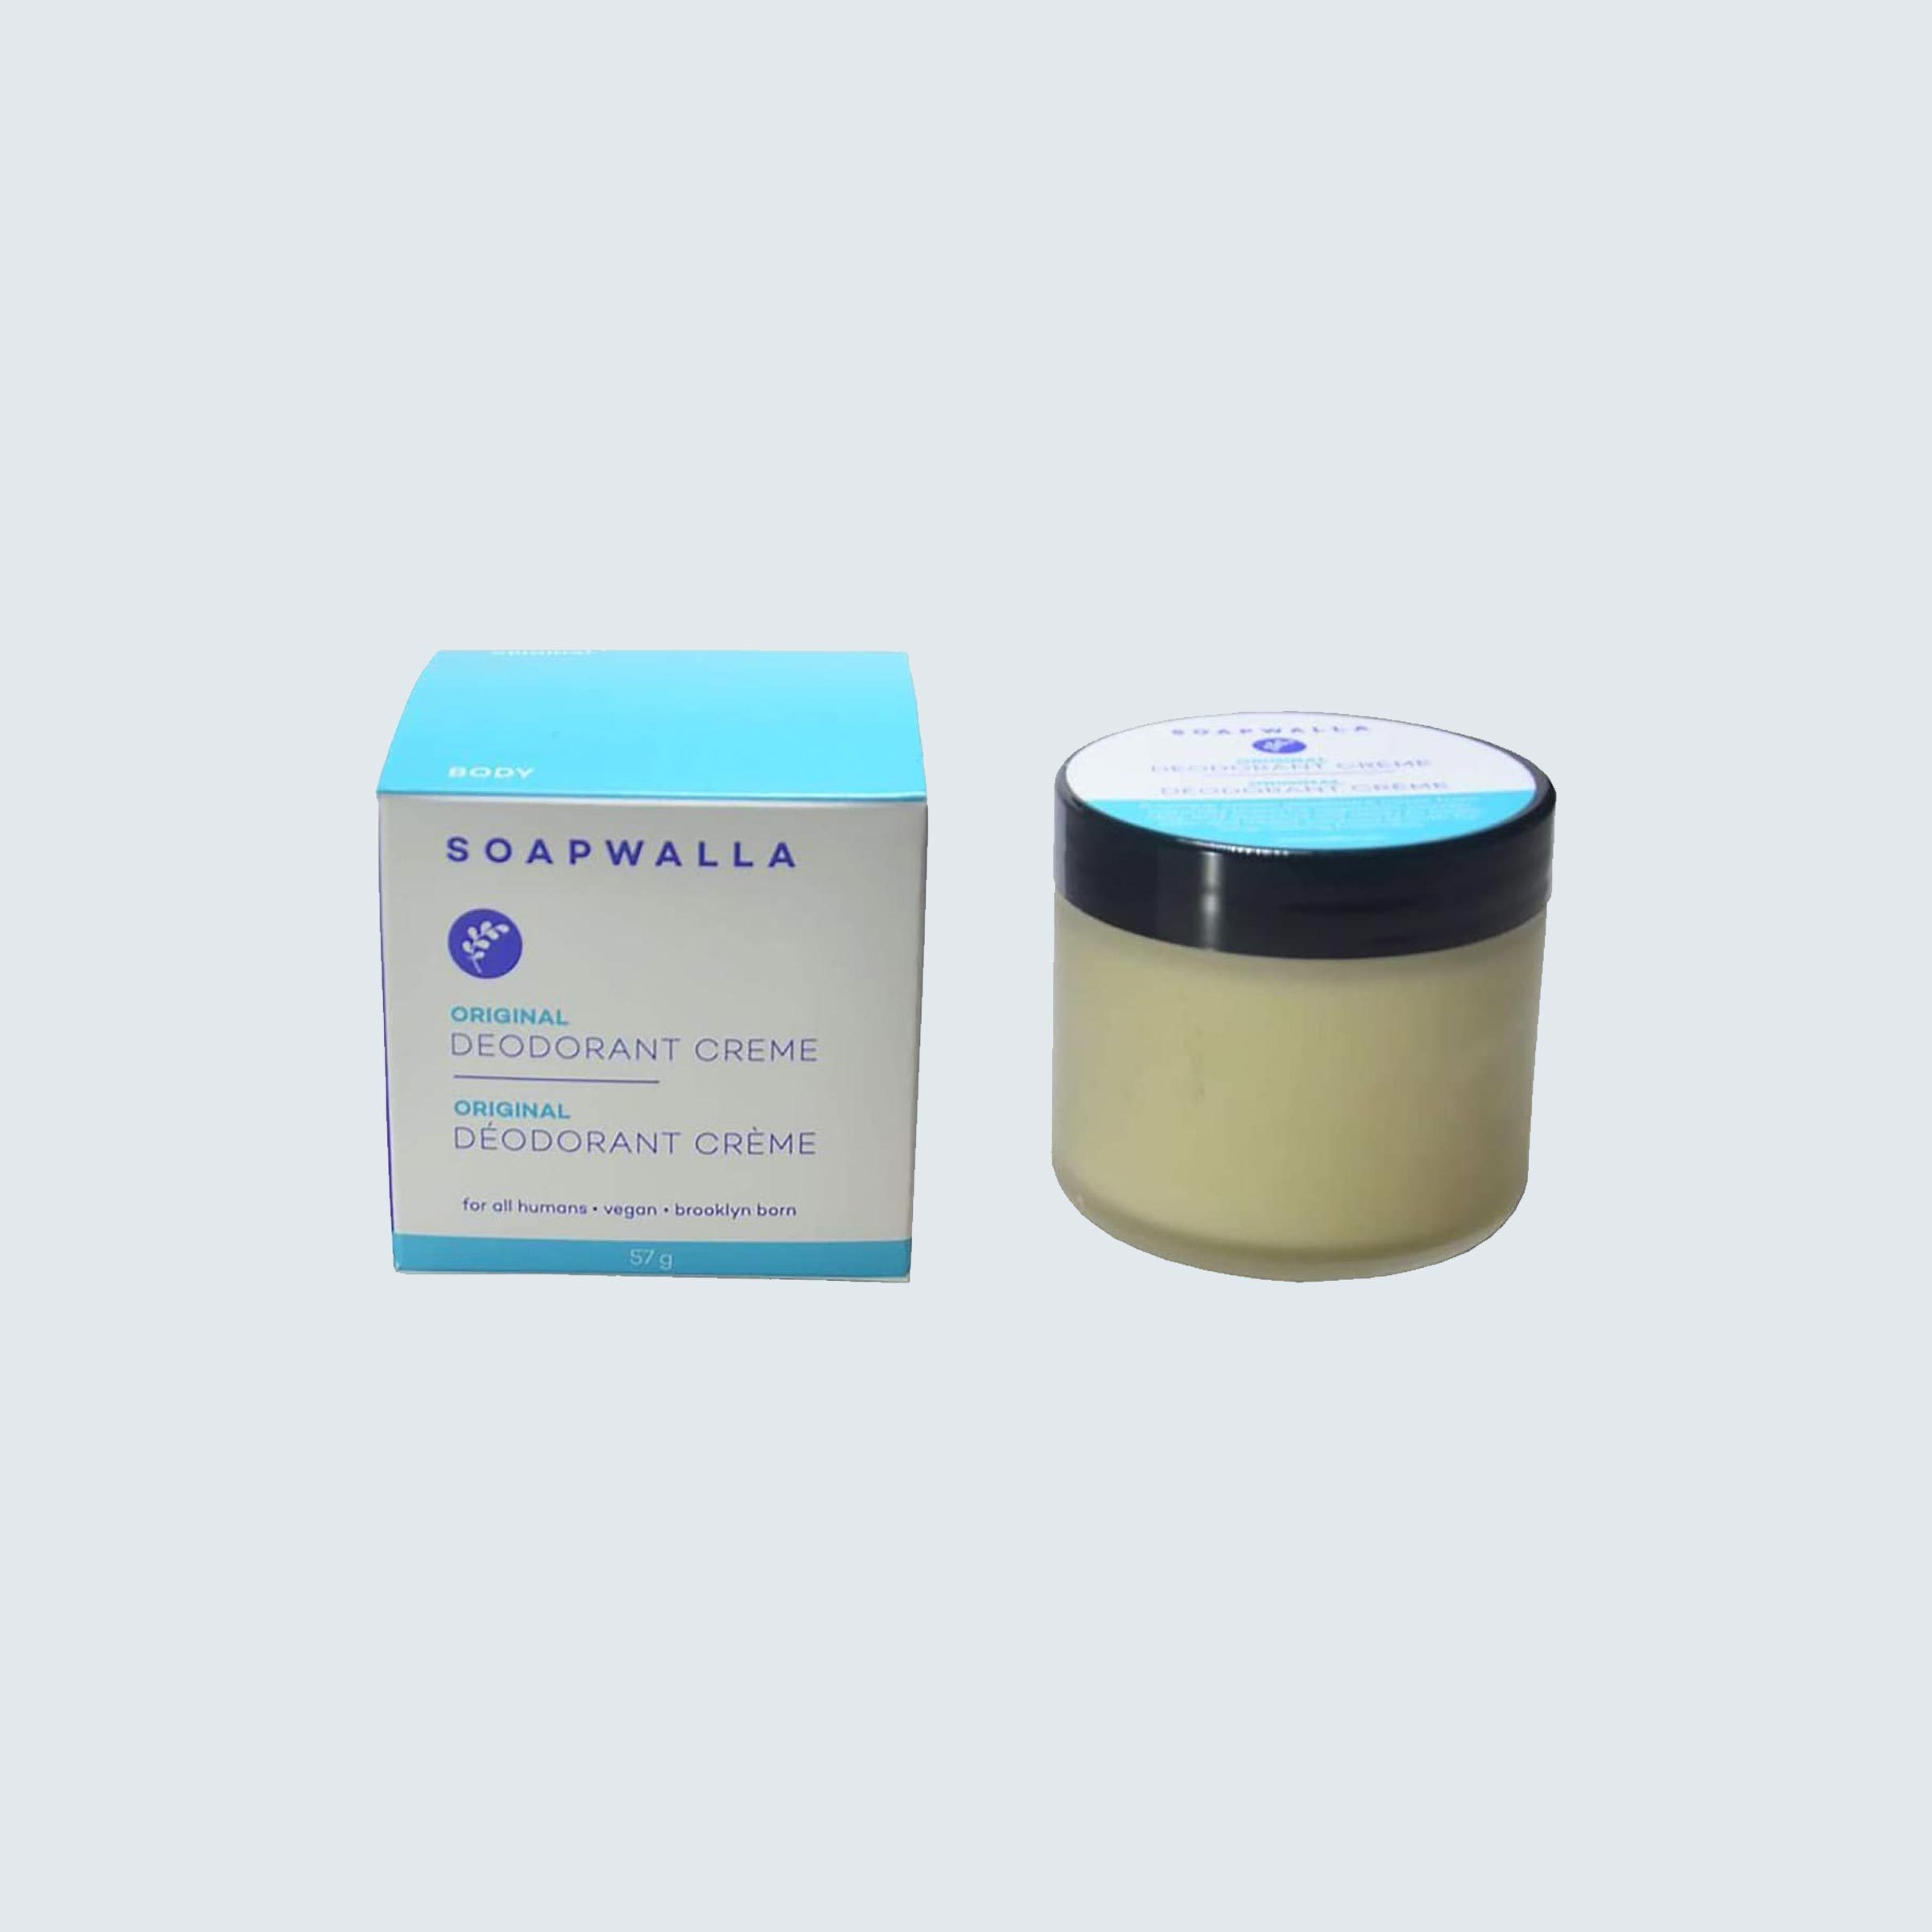 Soapwalla skincare products